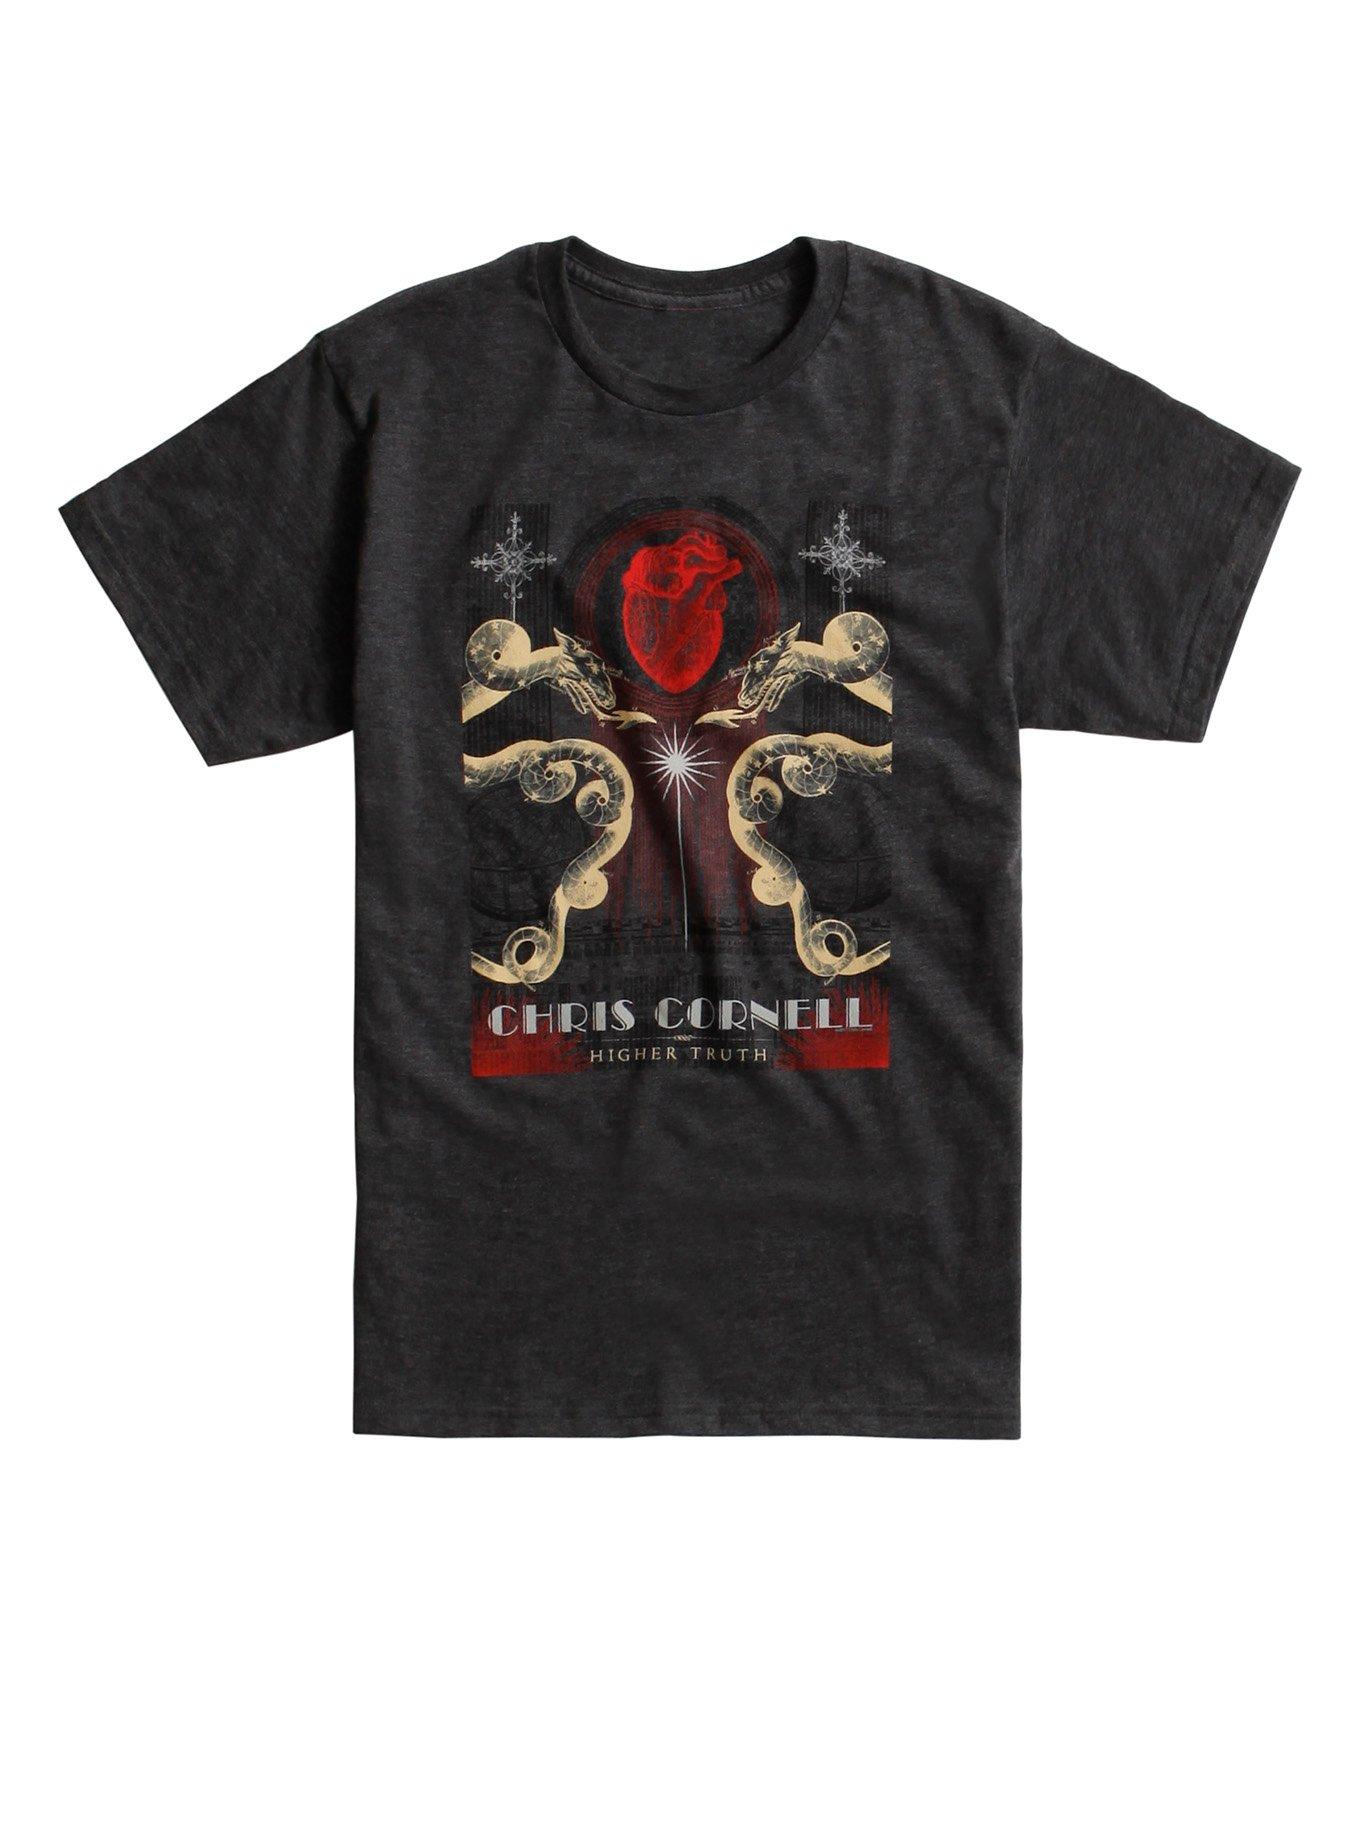 Chris Cornell Higher Truth Album T-Shirt, BLACK, hi-res